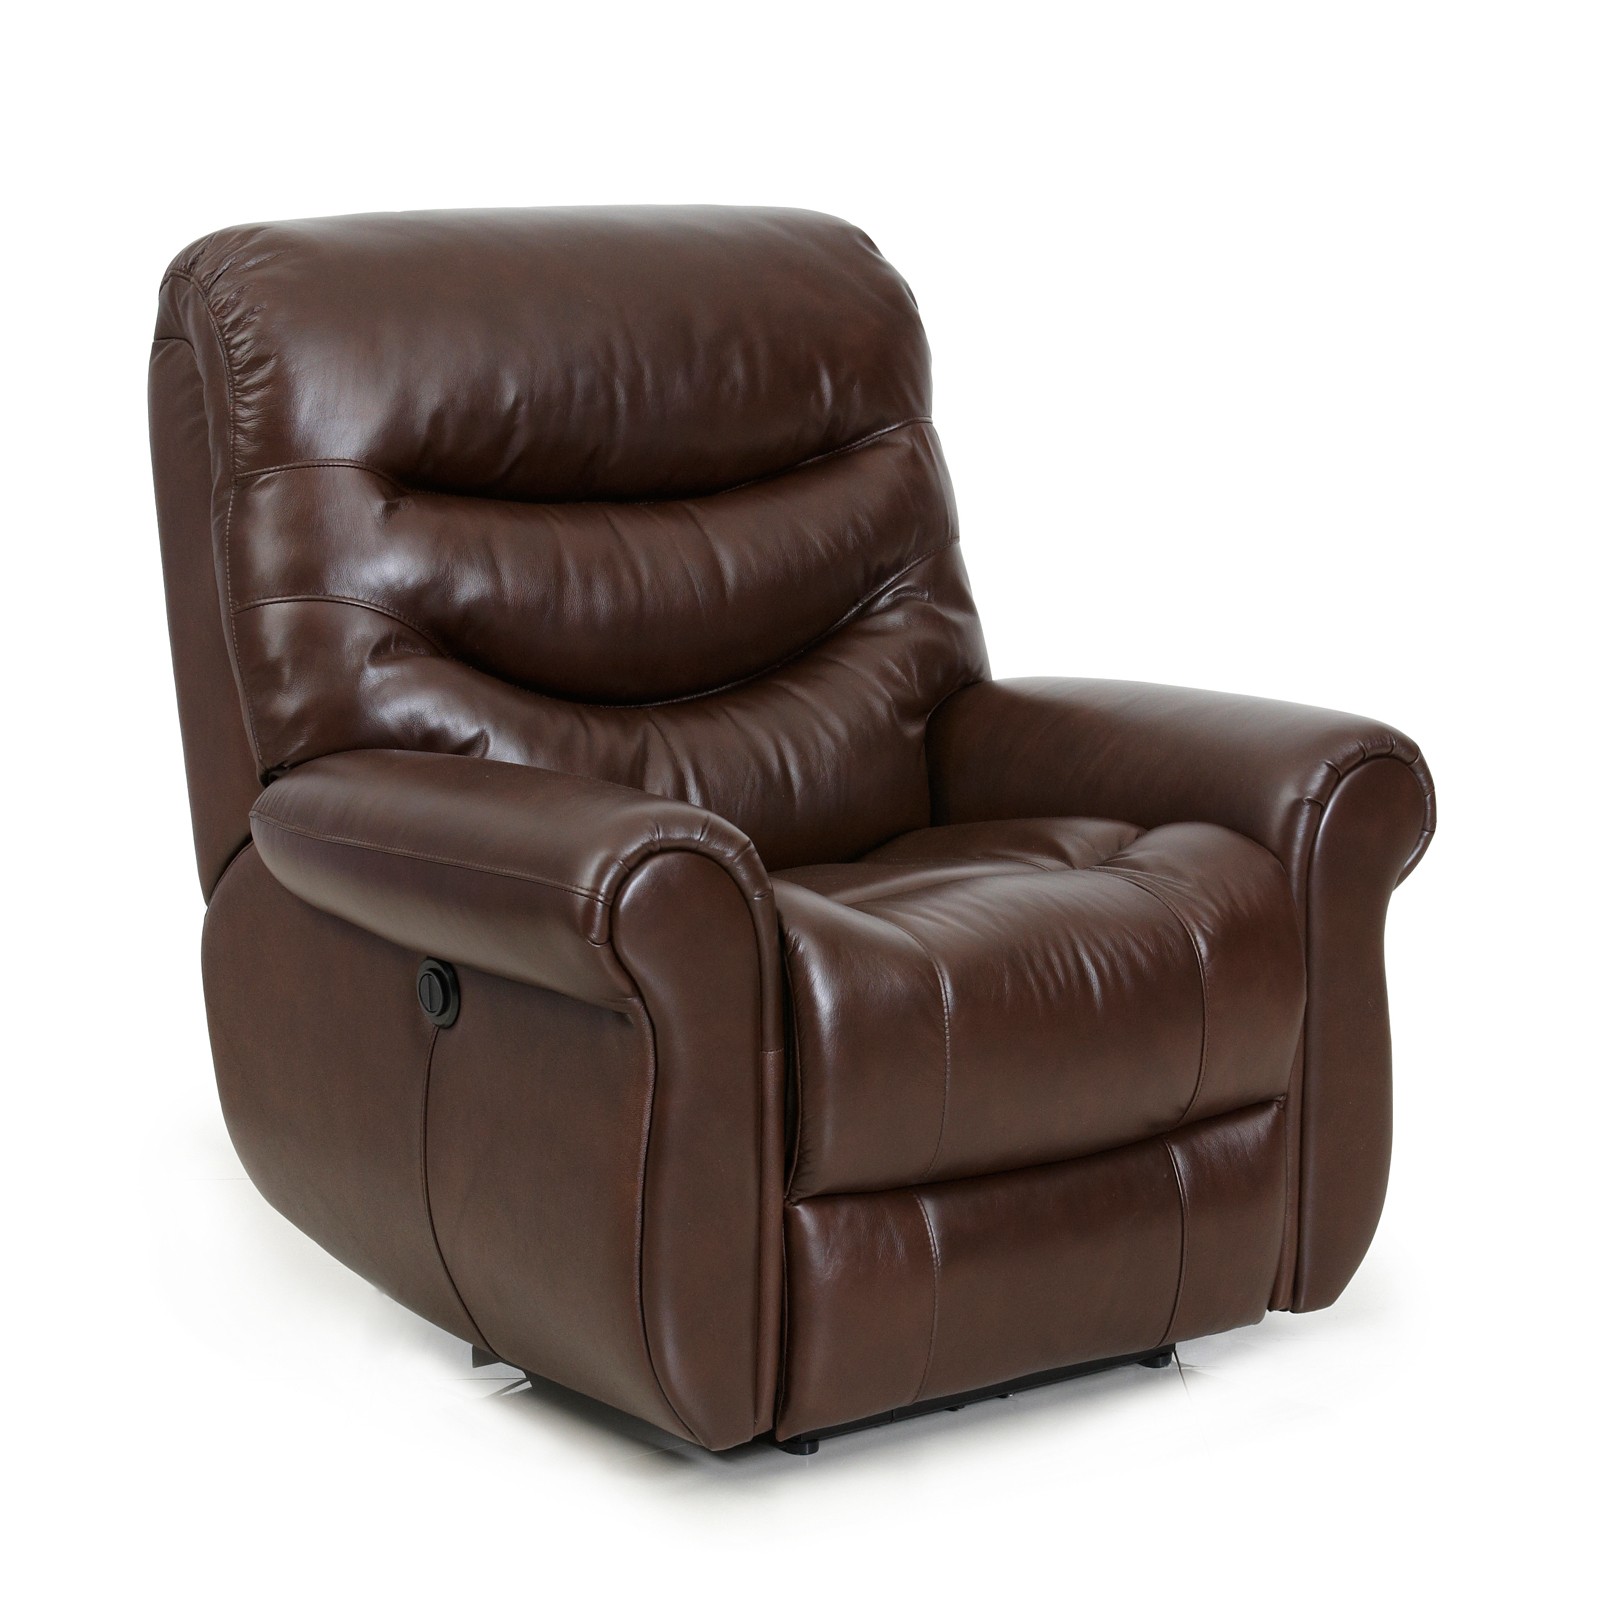 Barcalounger dandridge ii leather power recliner